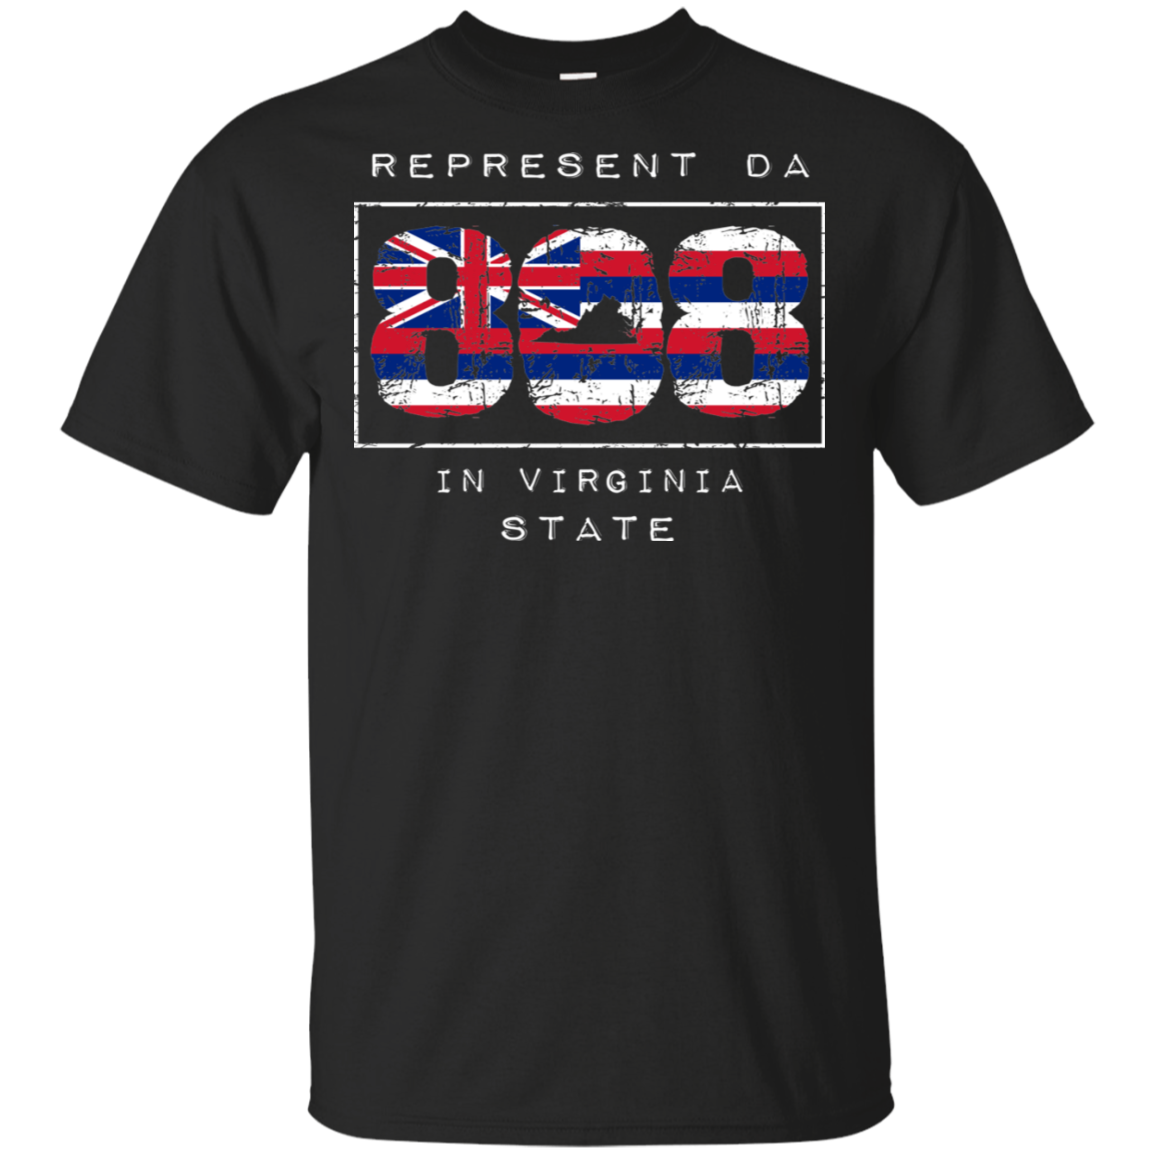 Rep Da 808 In Virginia State Ultra Cotton T-Shirt, T-Shirts, Hawaii Nei All Day